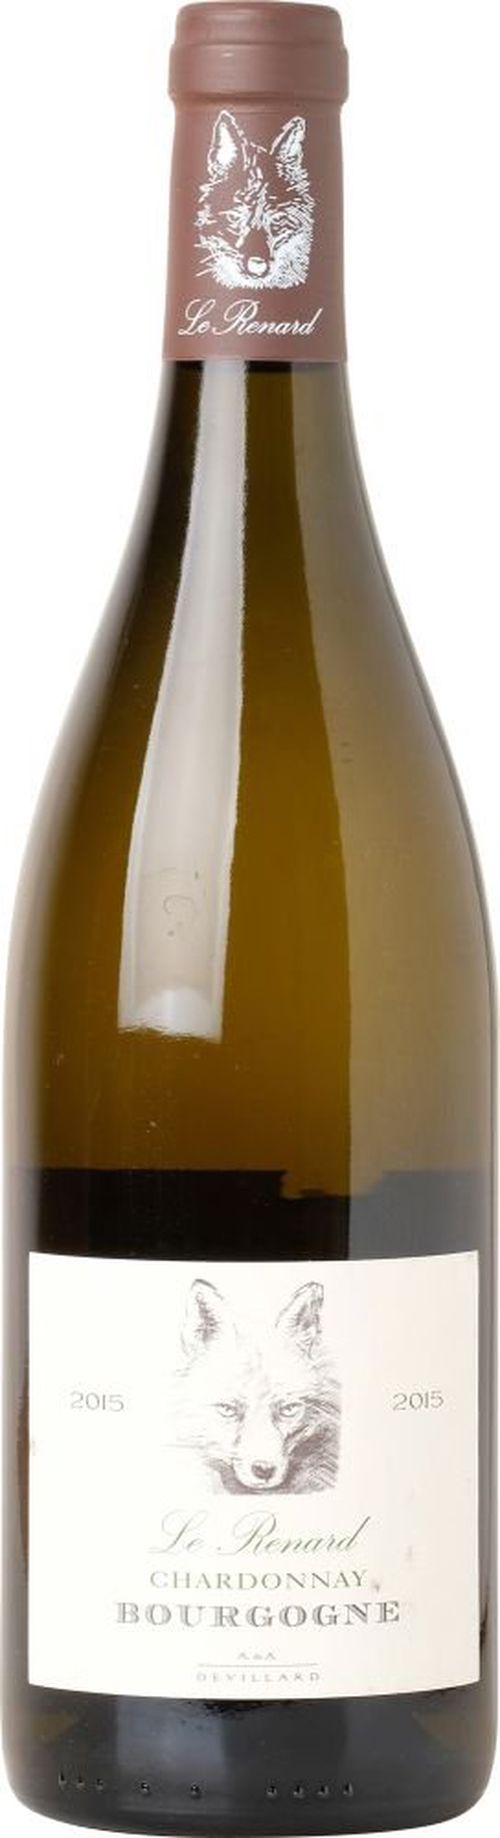 Devillard Le Renard Chardonnay Bourgogne 2015 0,75l 13%